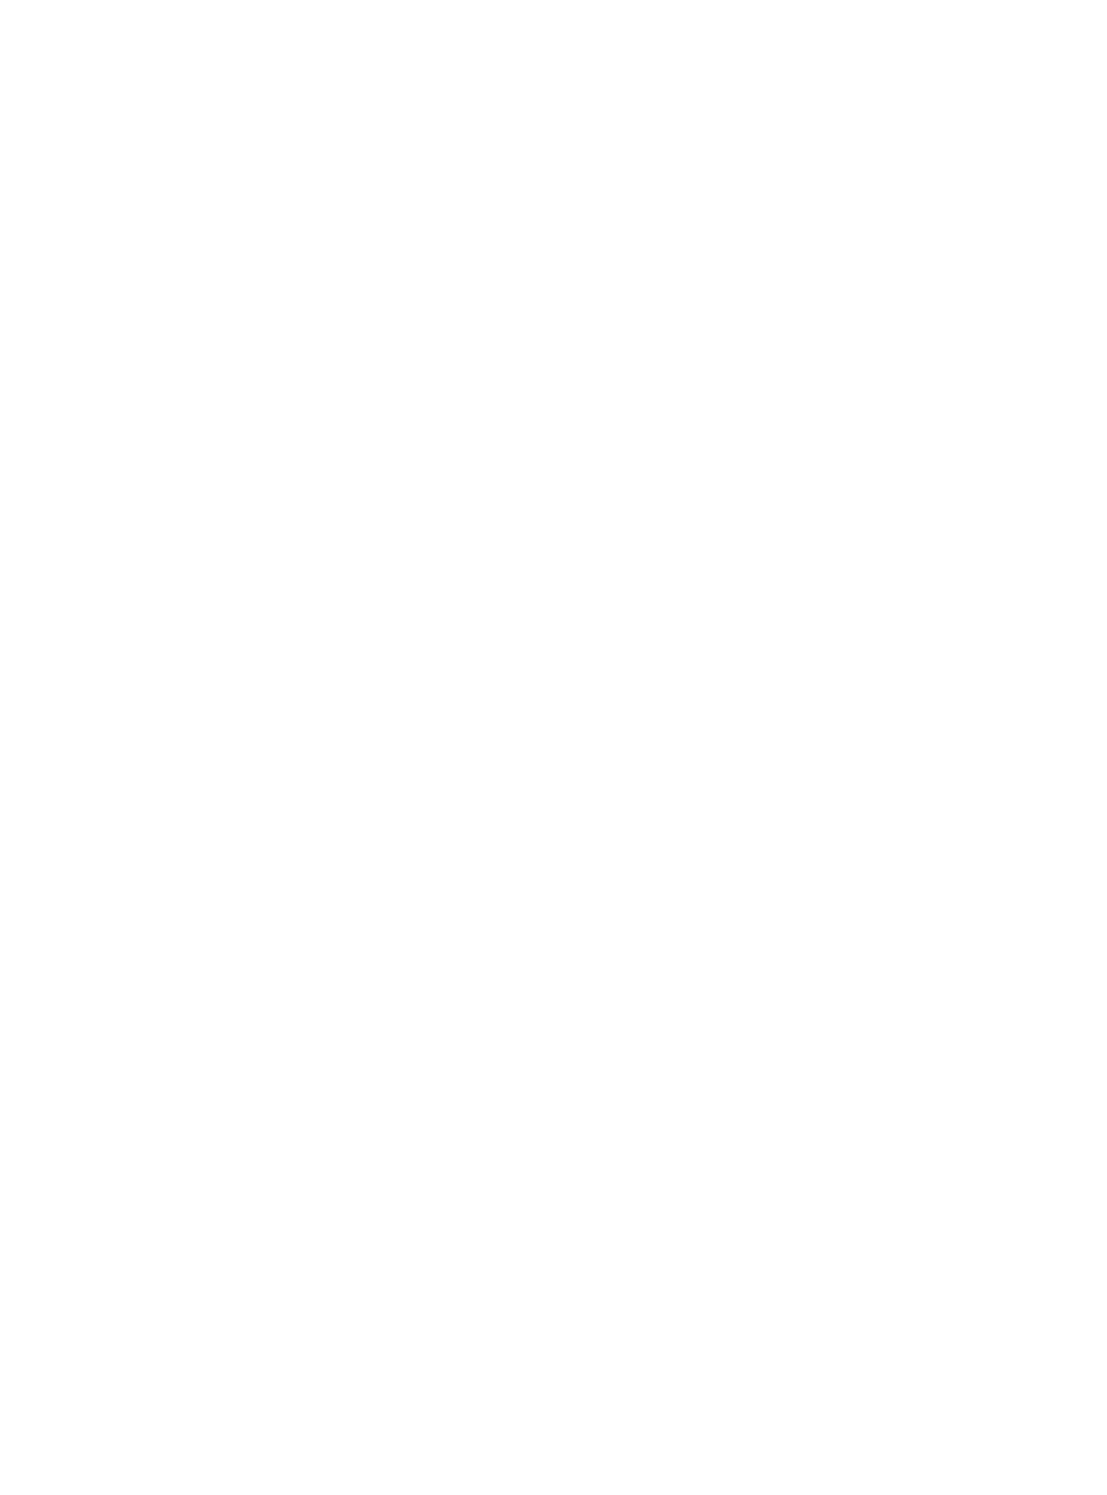 Dun & Bradstreet

 logo for dark backgrounds (transparent PNG)